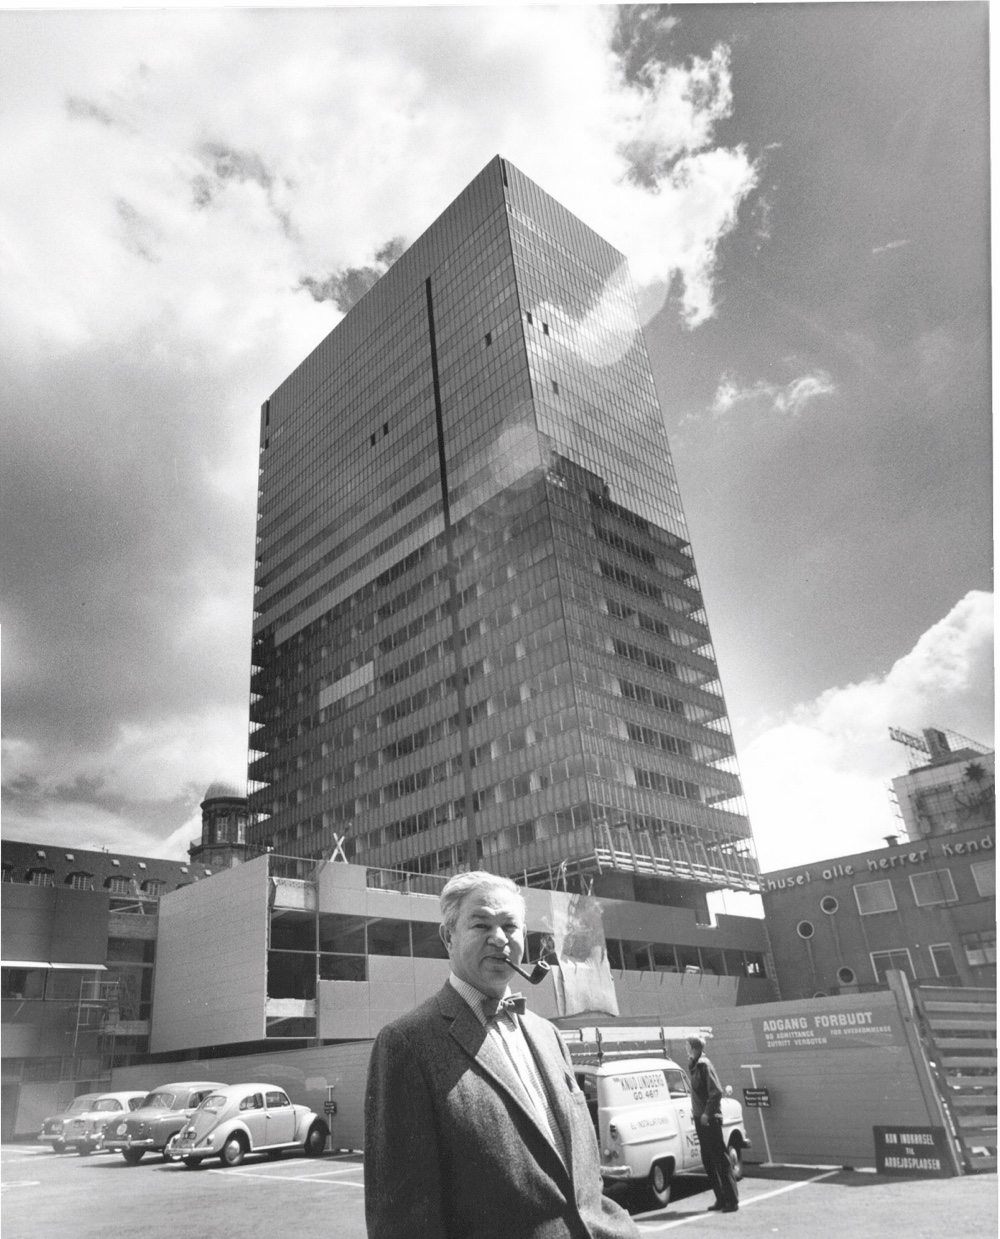 Arne Jacobsen outside the SAS Royal Hotel